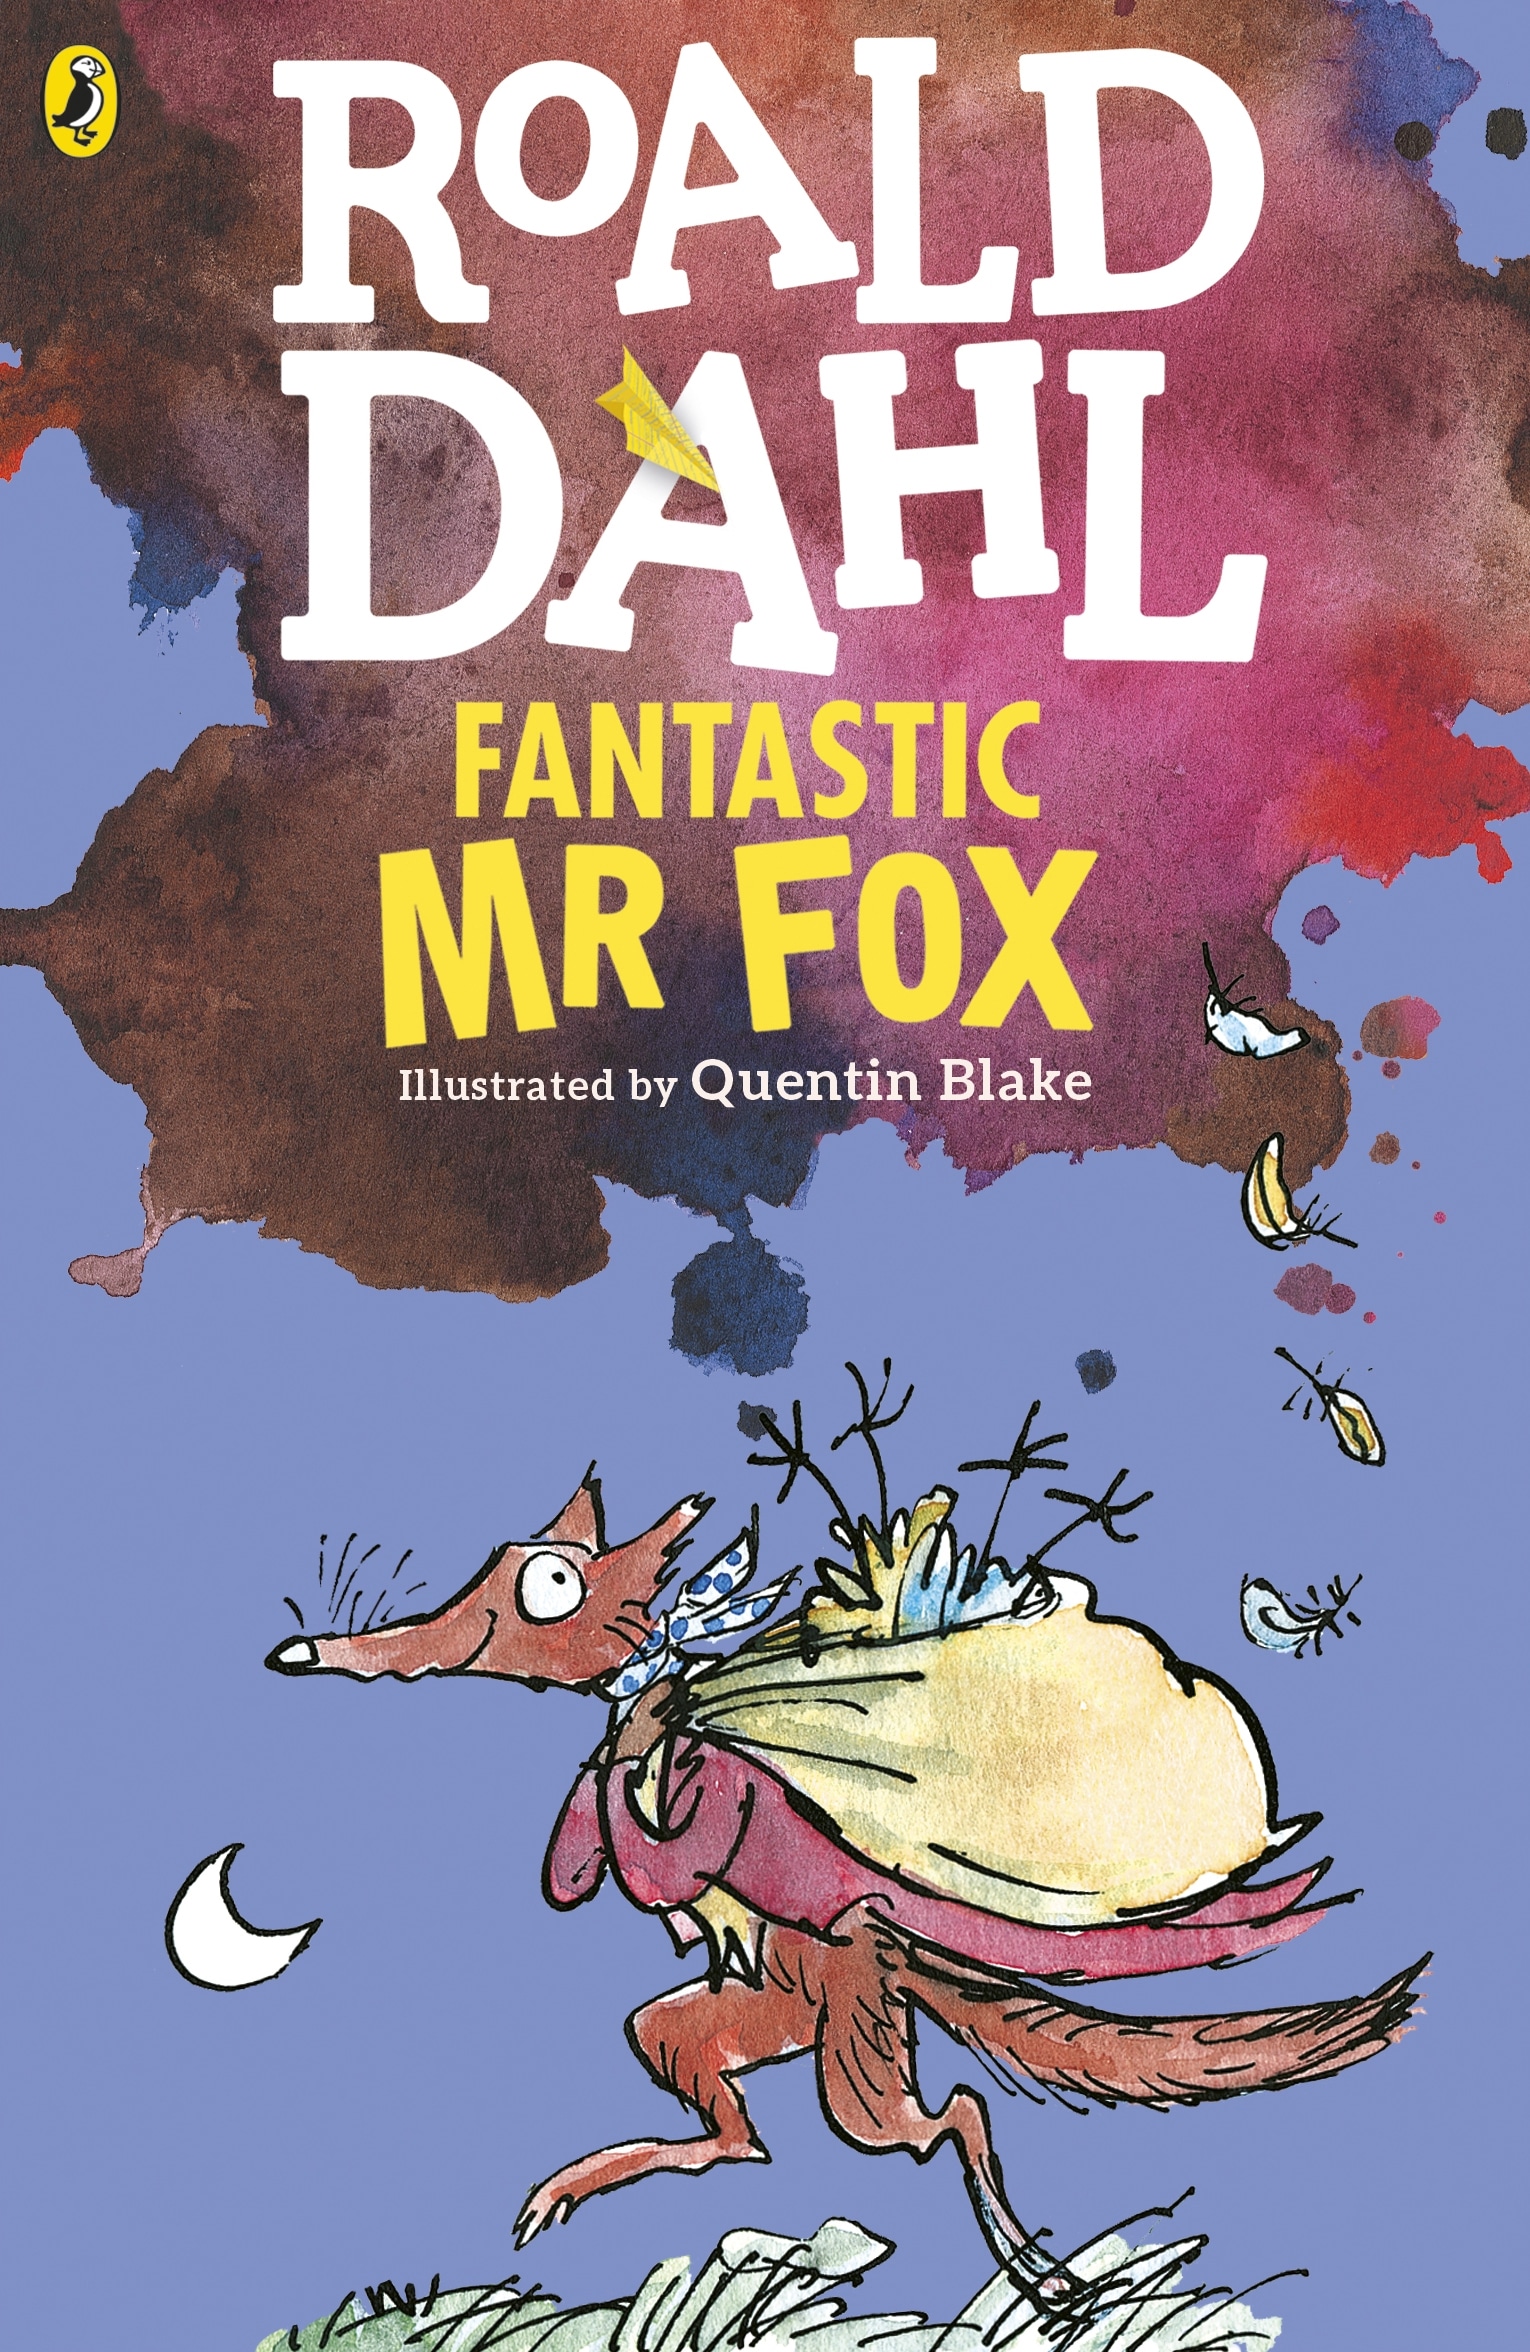 Book “Fantastic Mr Fox” by Roald Dahl — February 11, 2016